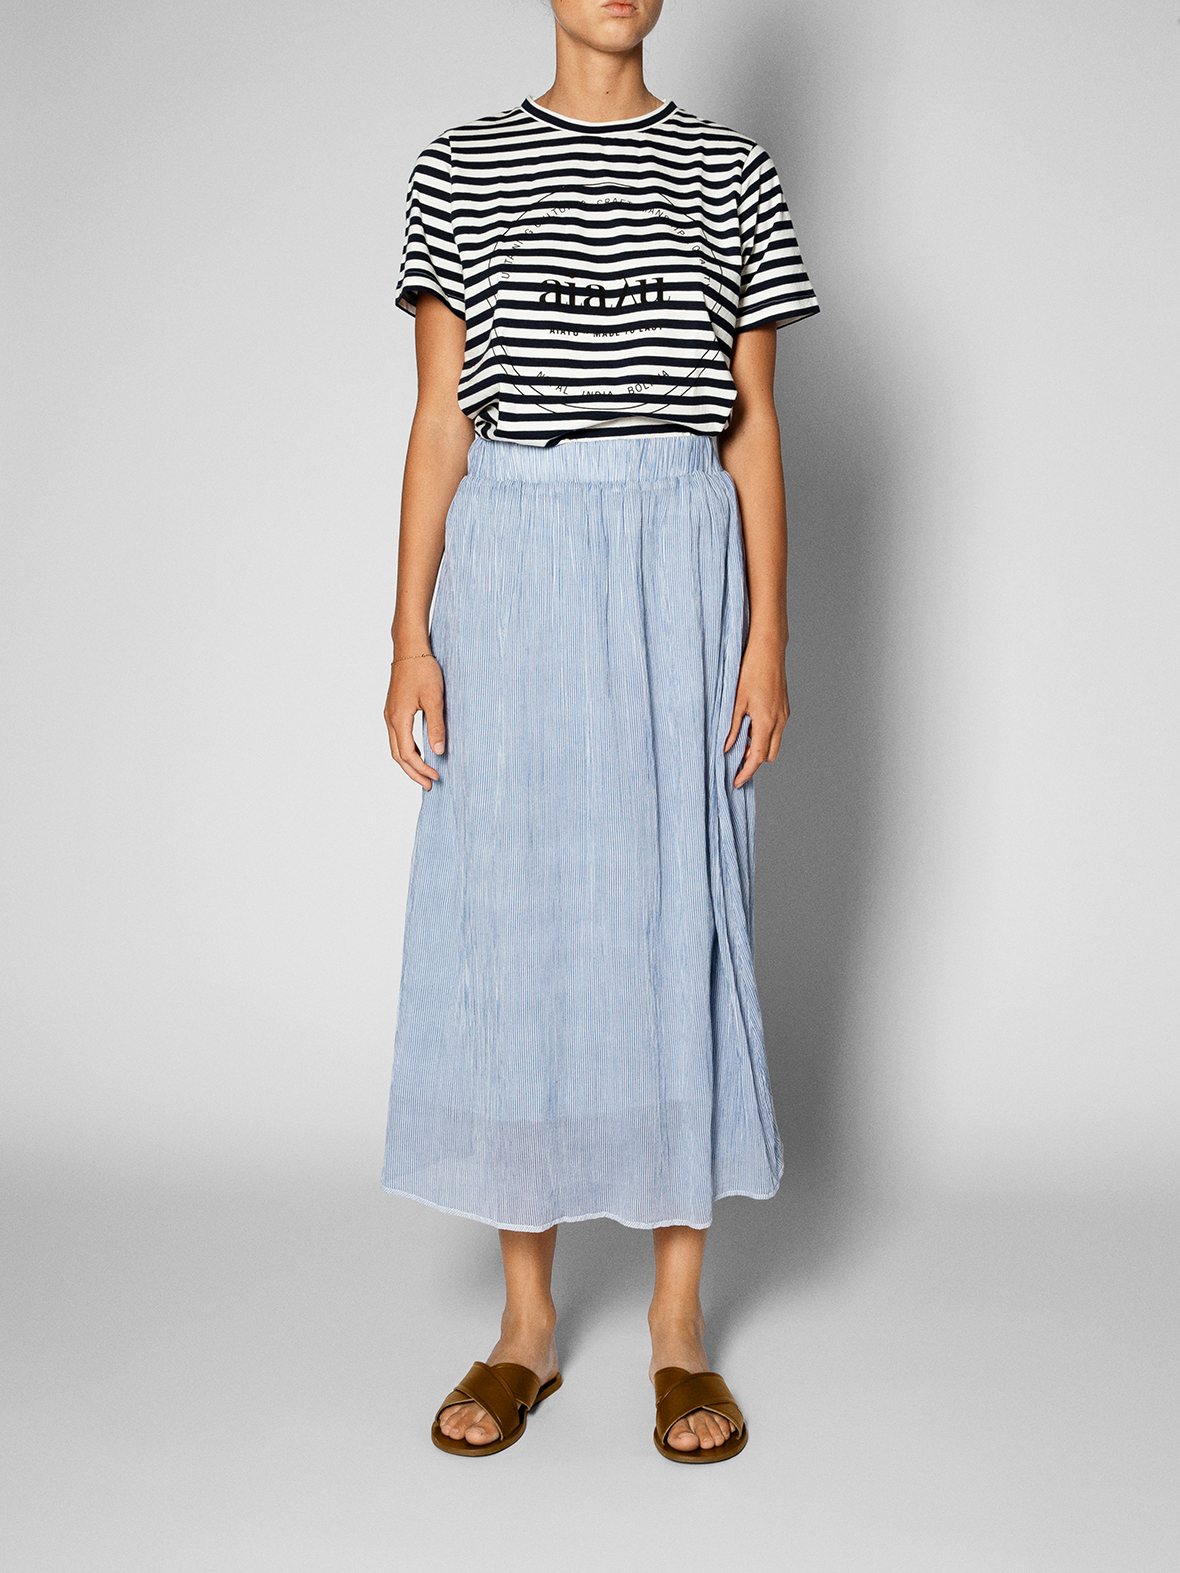 Enula9 - Gravid nederdele shorts - AIAYU - Long skirt